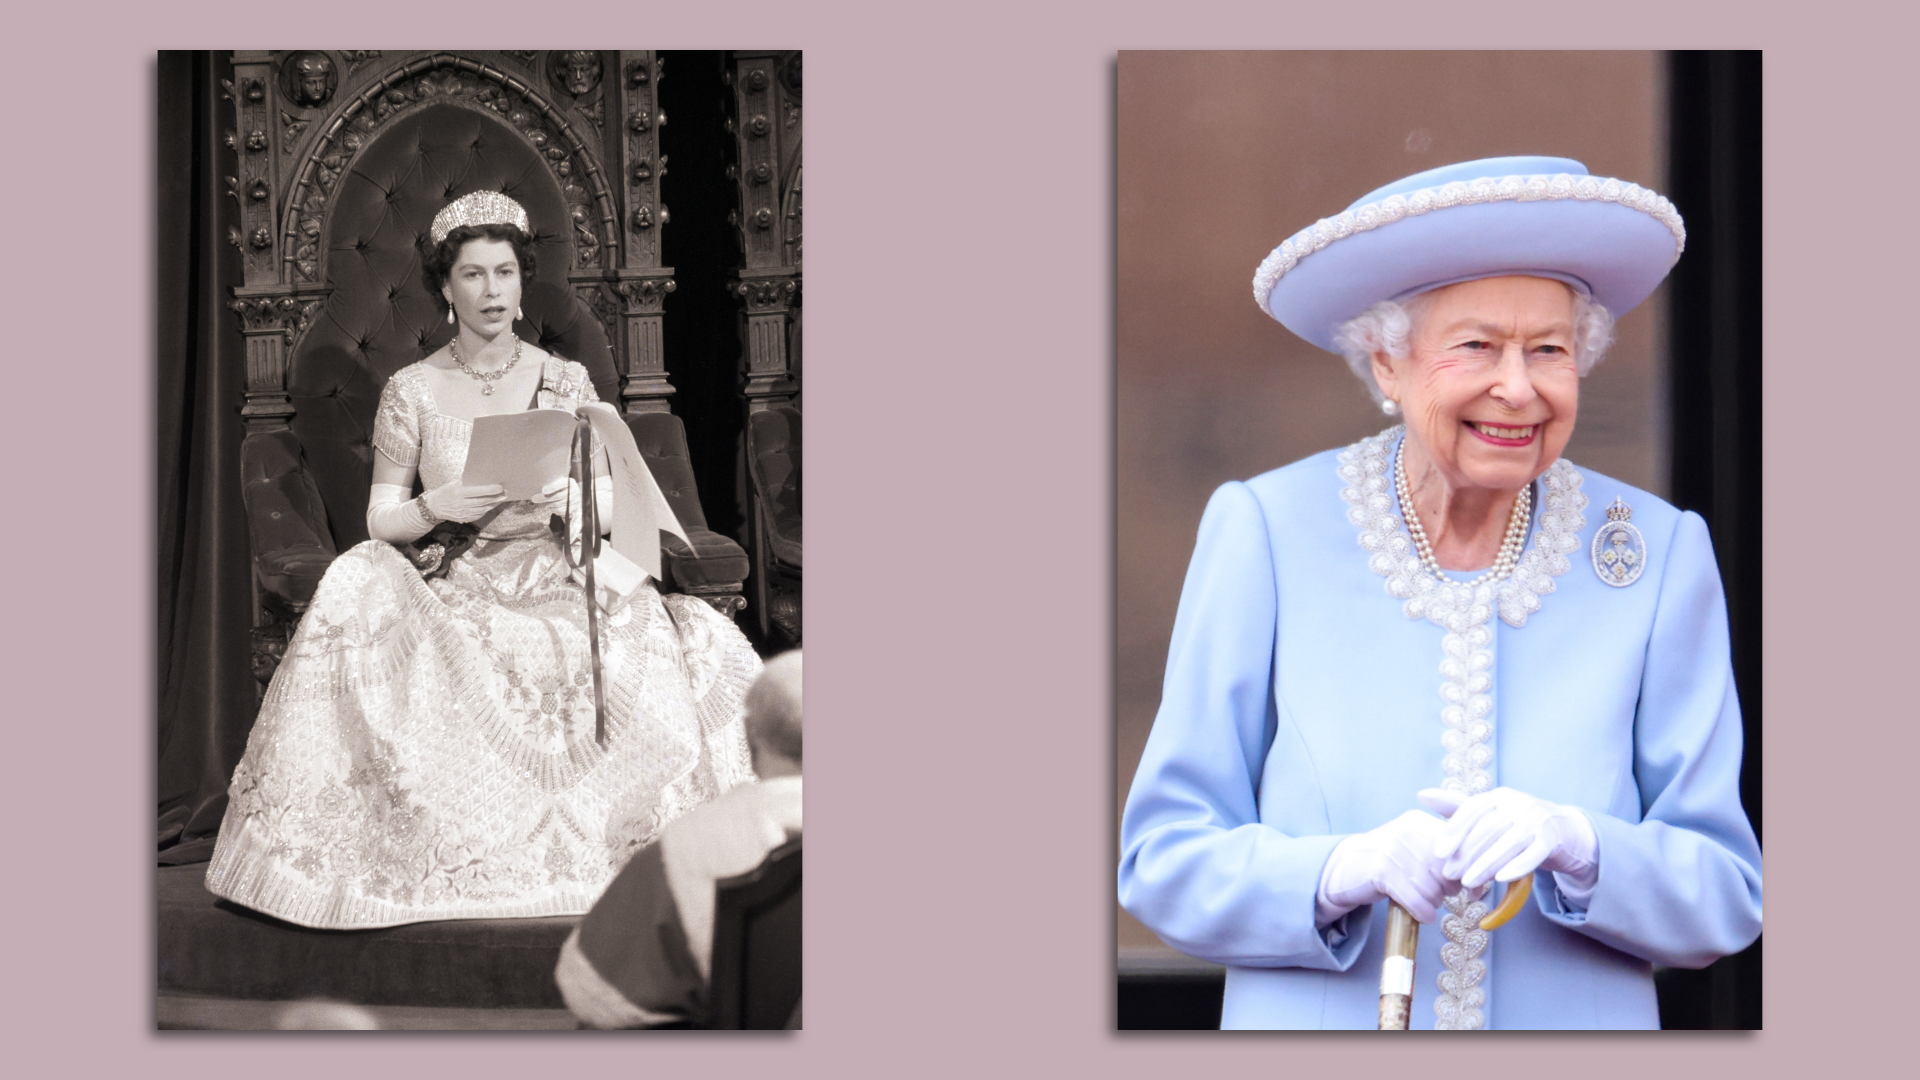 Queen Elizabeth II in periwinkle suit and hat on her jubilee celebration